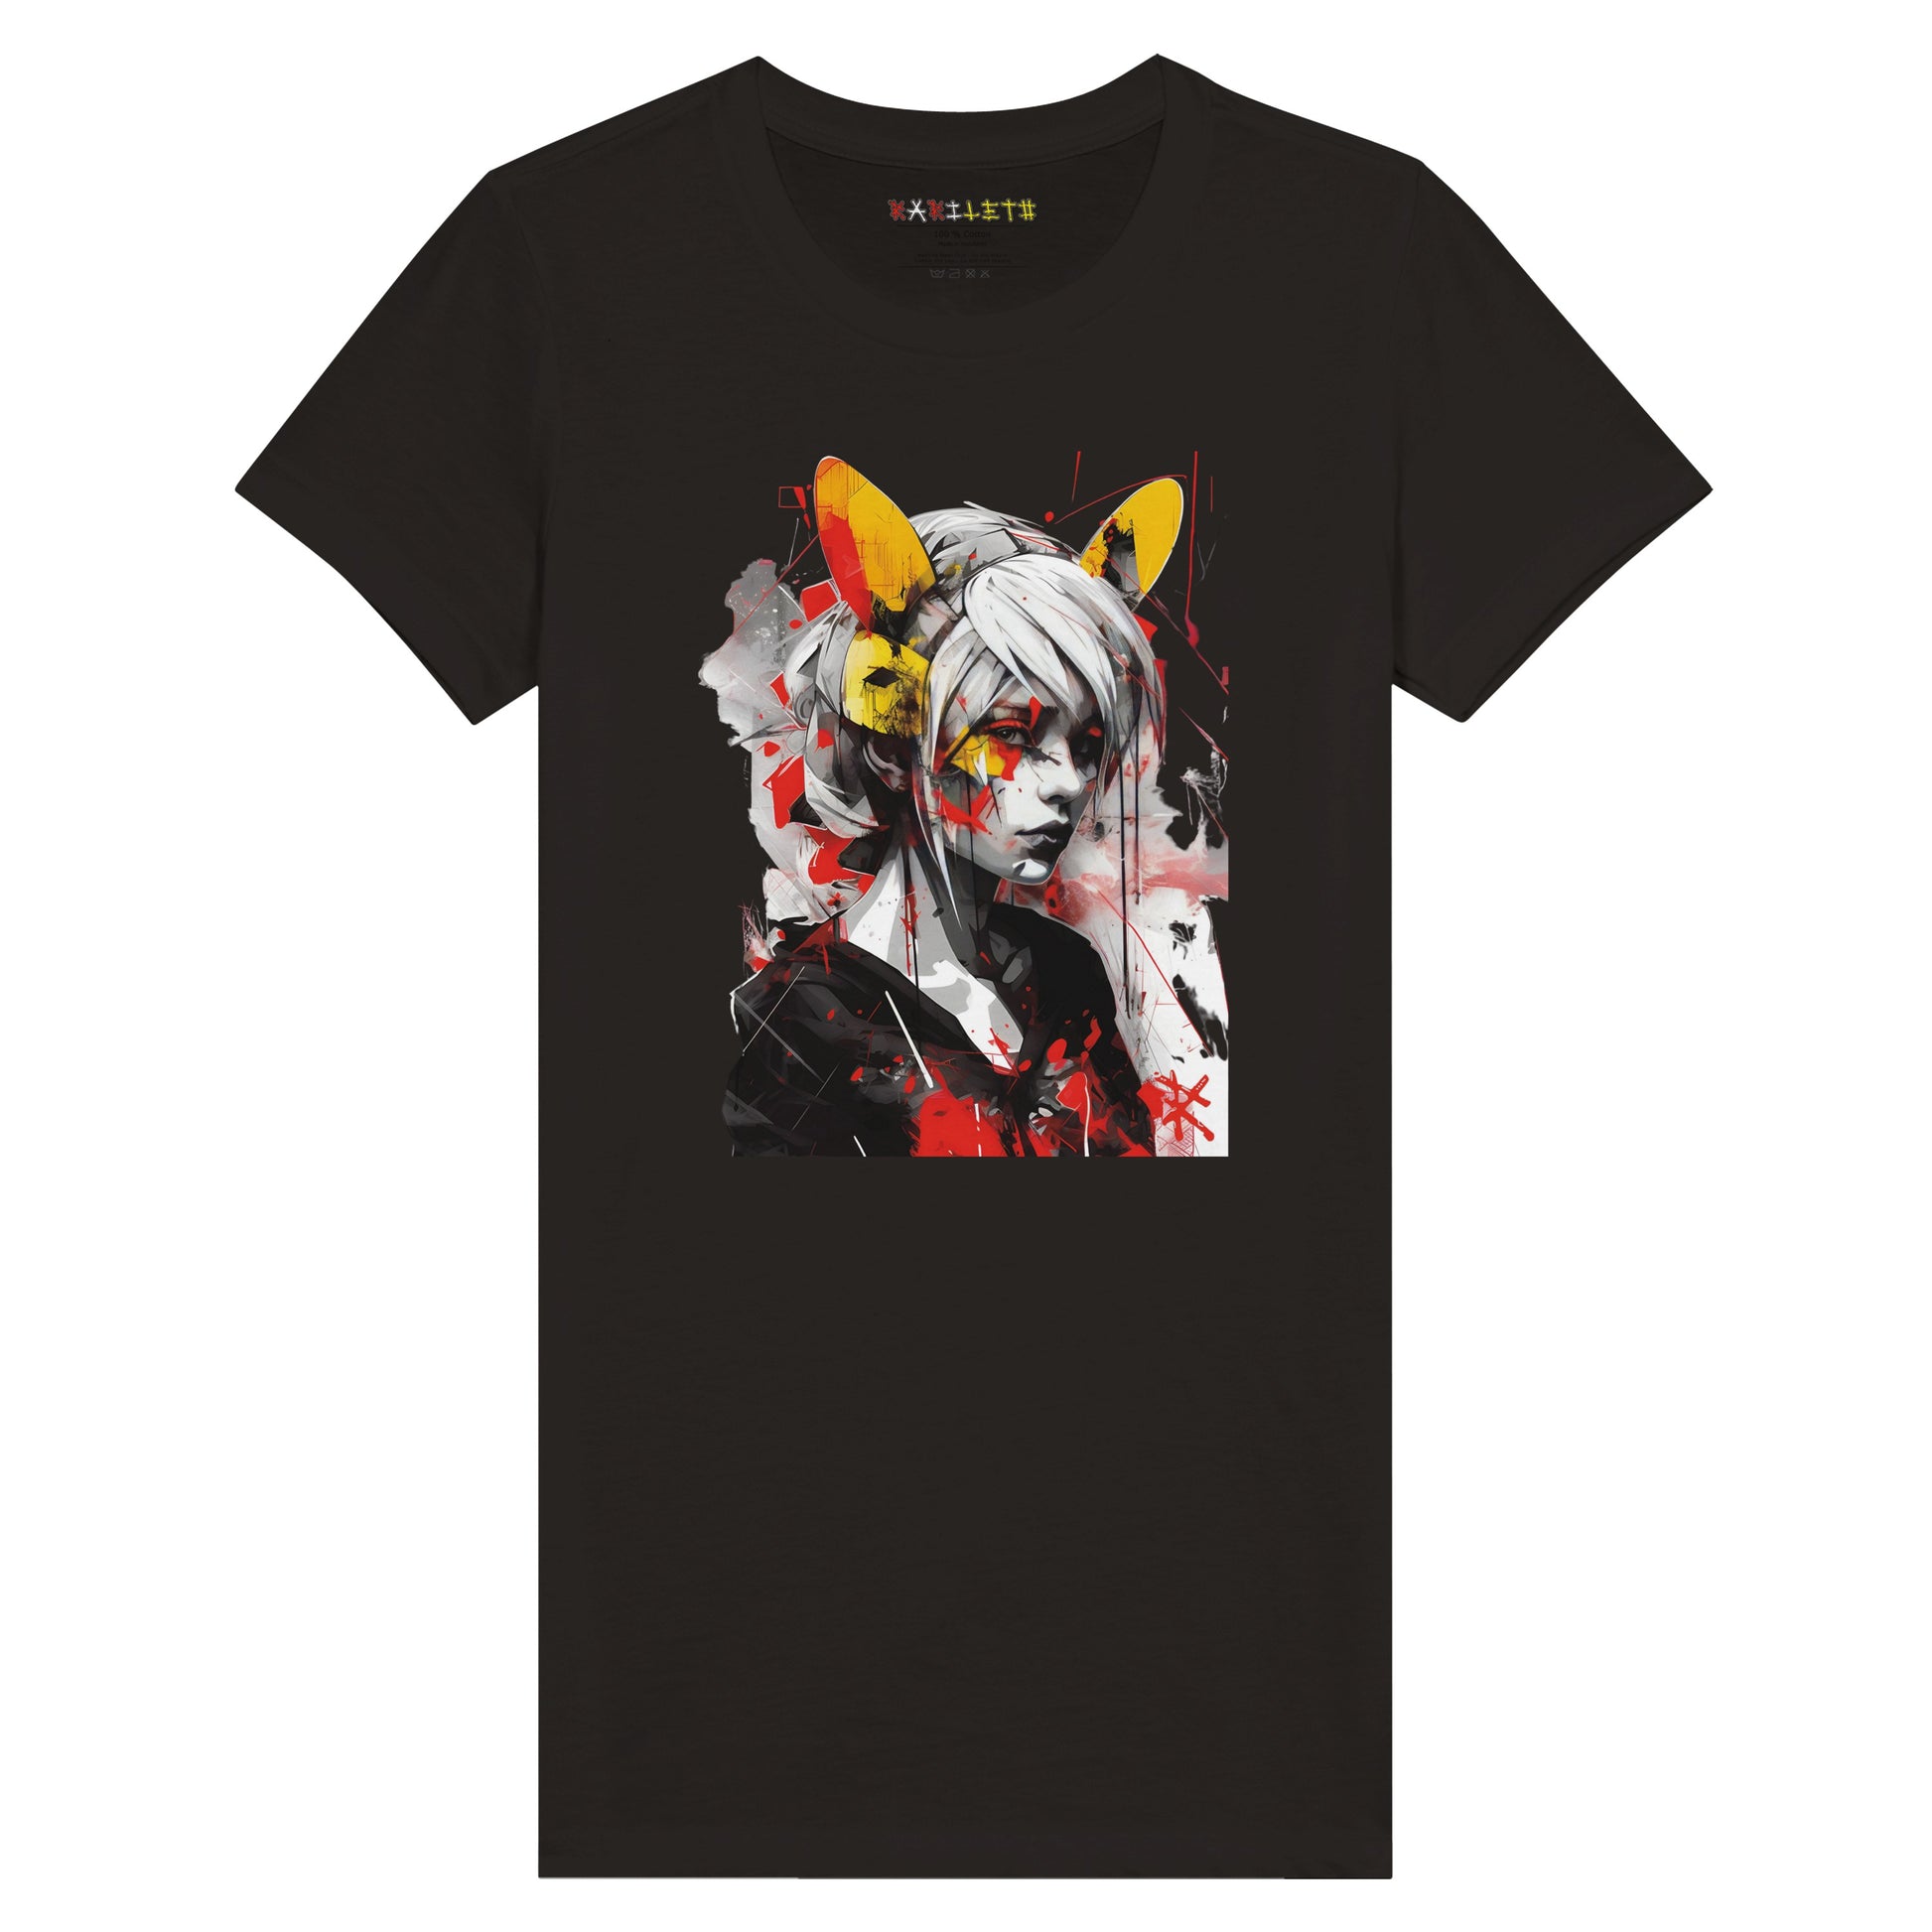 GIRL WITH CAT EARS Premium Tee - Rarileto t shirts - Black - S